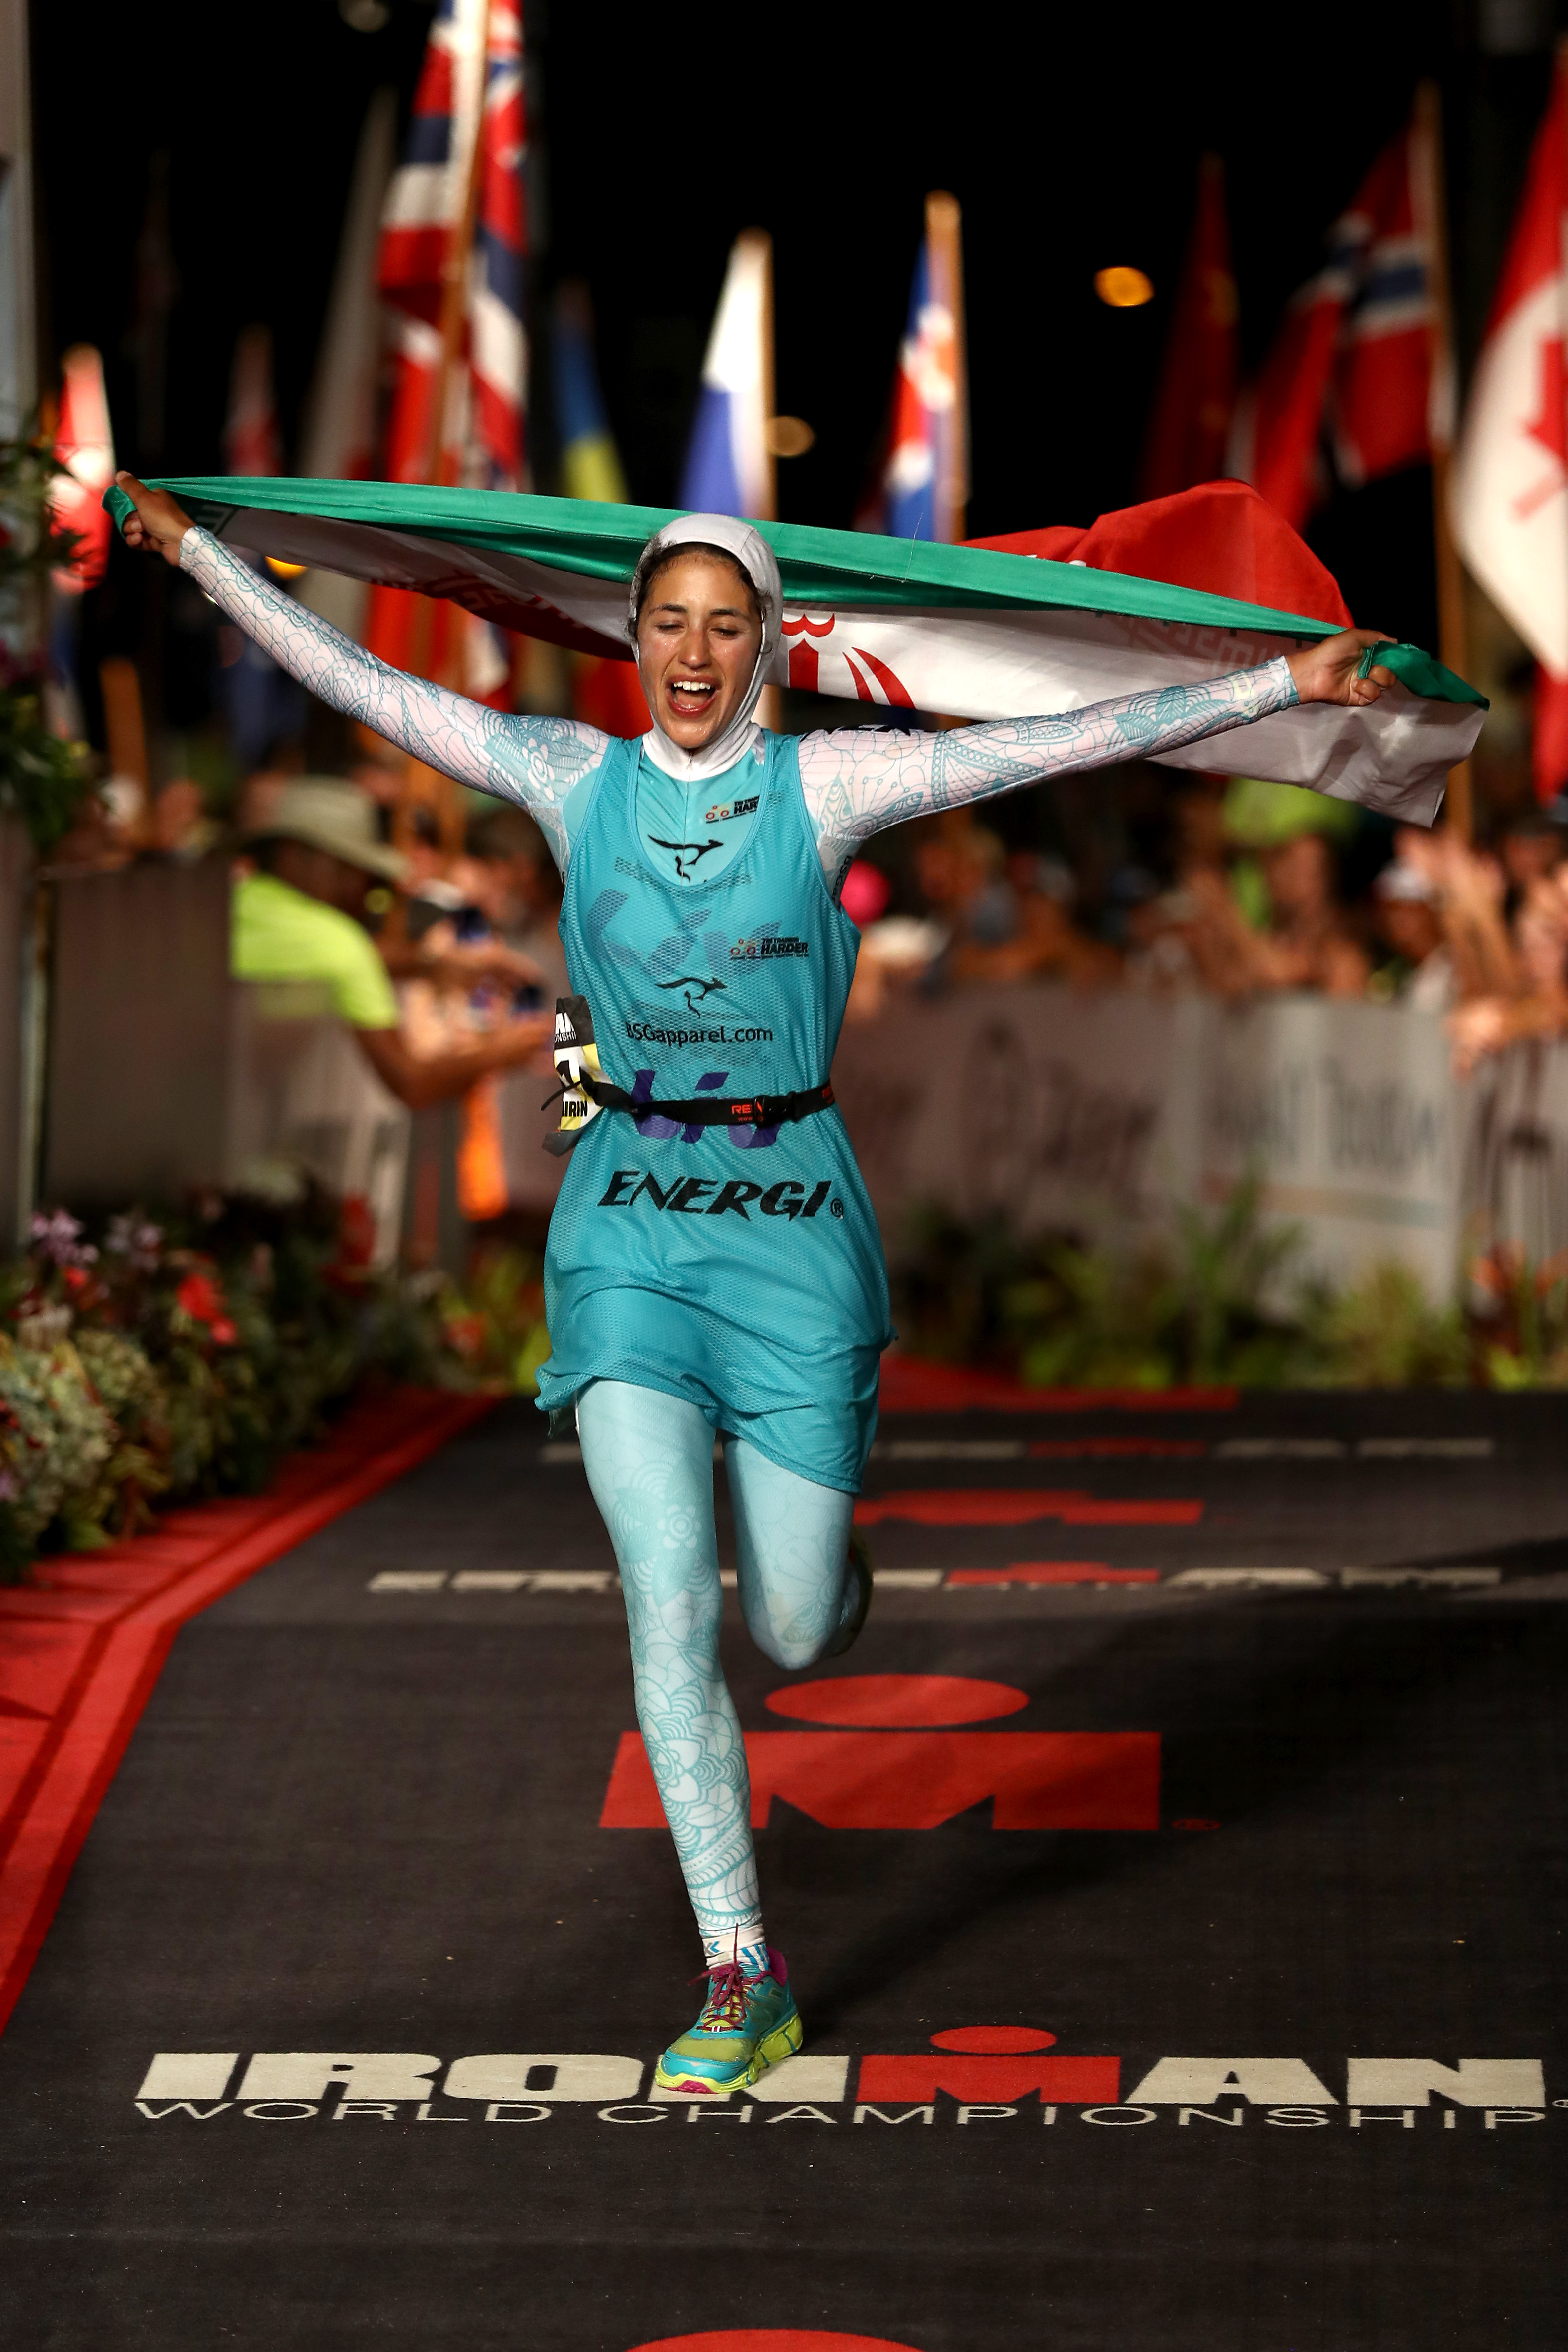 KAILUA KONA, HI - OCTOBER 08:  Shirin Girami #151 of Iran reacts after crossing the finish line in the 2016 IRONMAN World Championship triathlon on October 8, 2016 in Kailua Kona, Hawaii.  (Photo by Sean M. Haffey/Getty Images for Ironman)